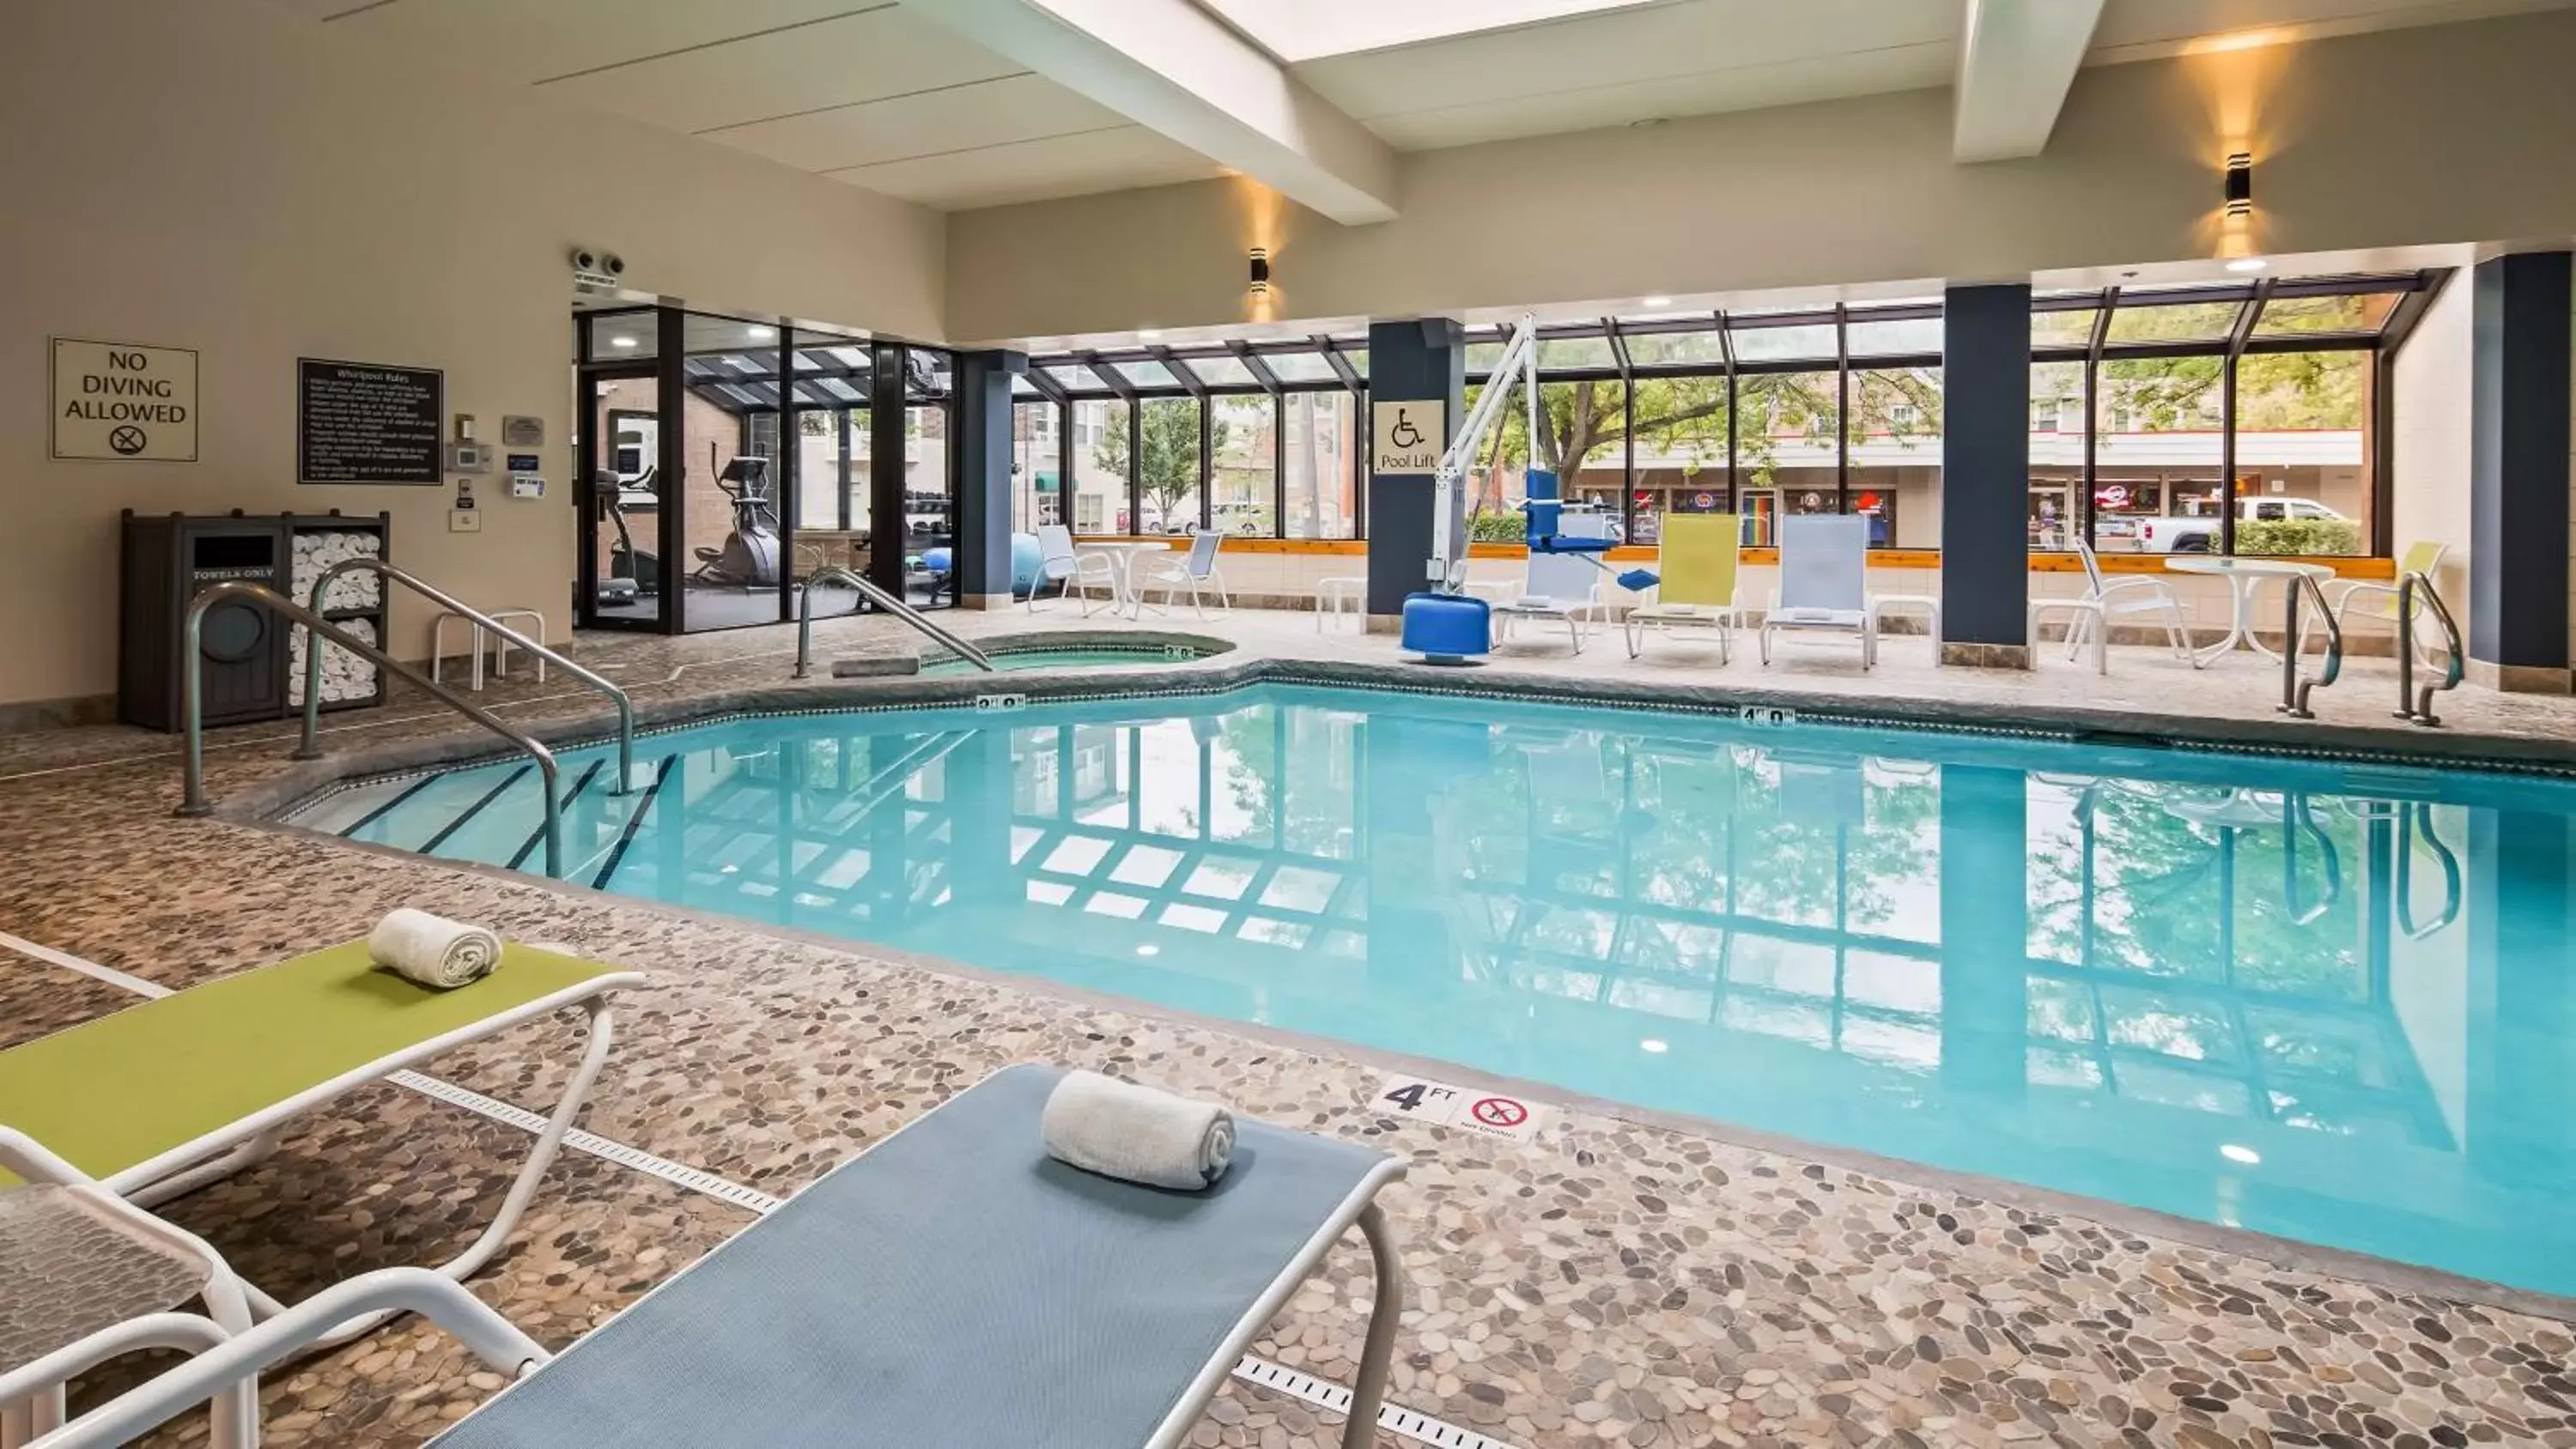 On site, Swimming Pool in Best Western Plus InnTowner Madison